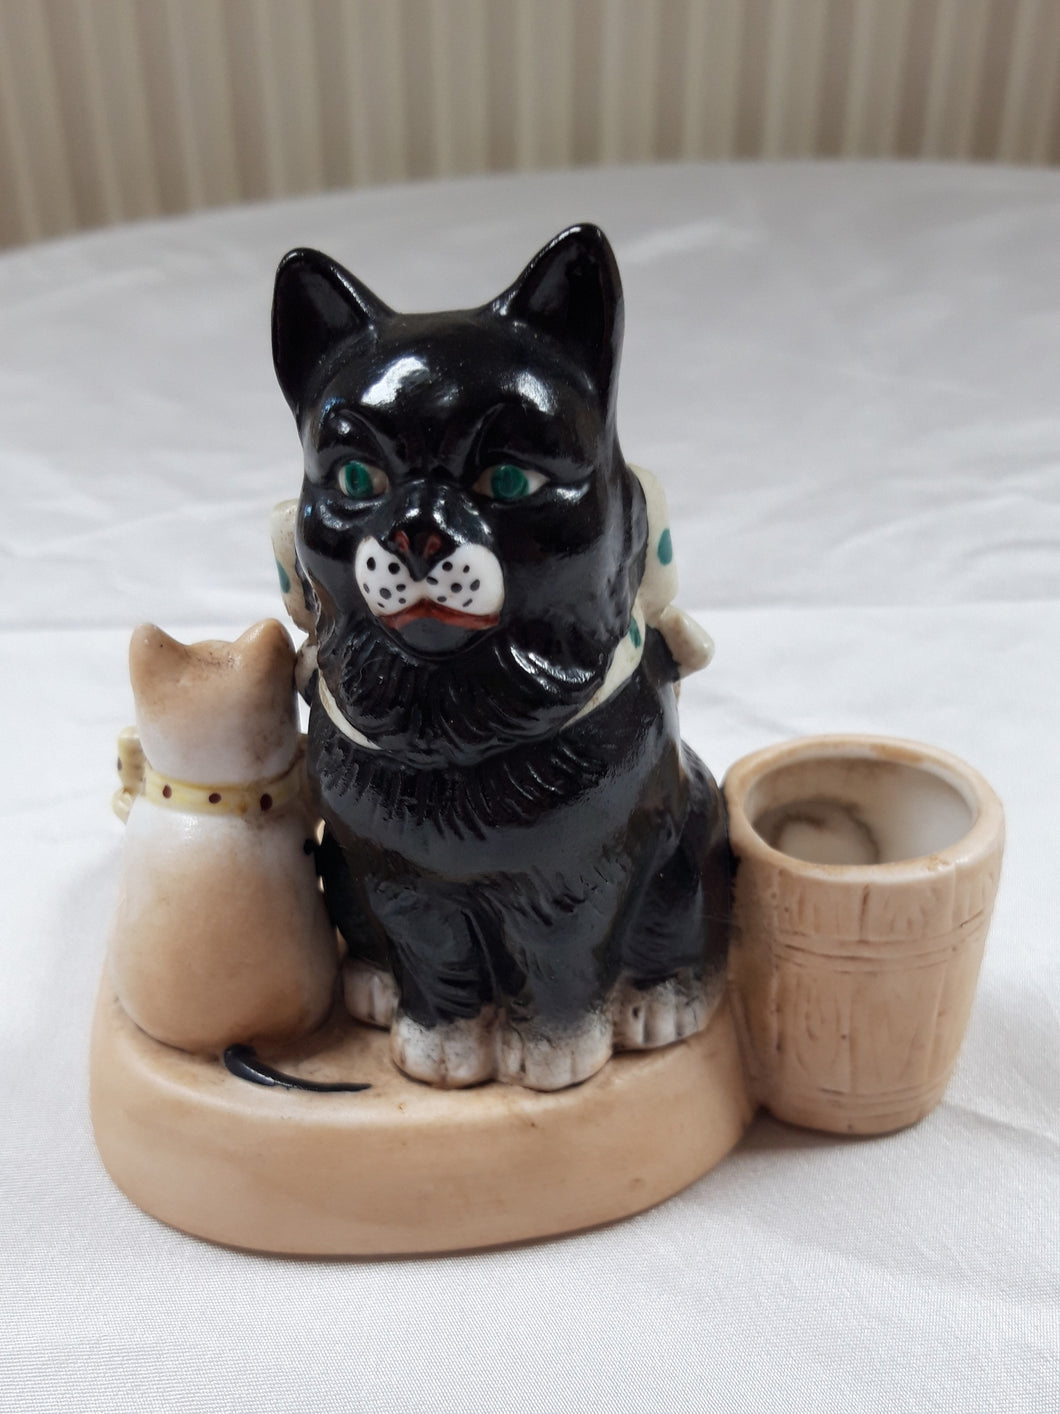 Pyrogen ceramic match holder figurines of cats